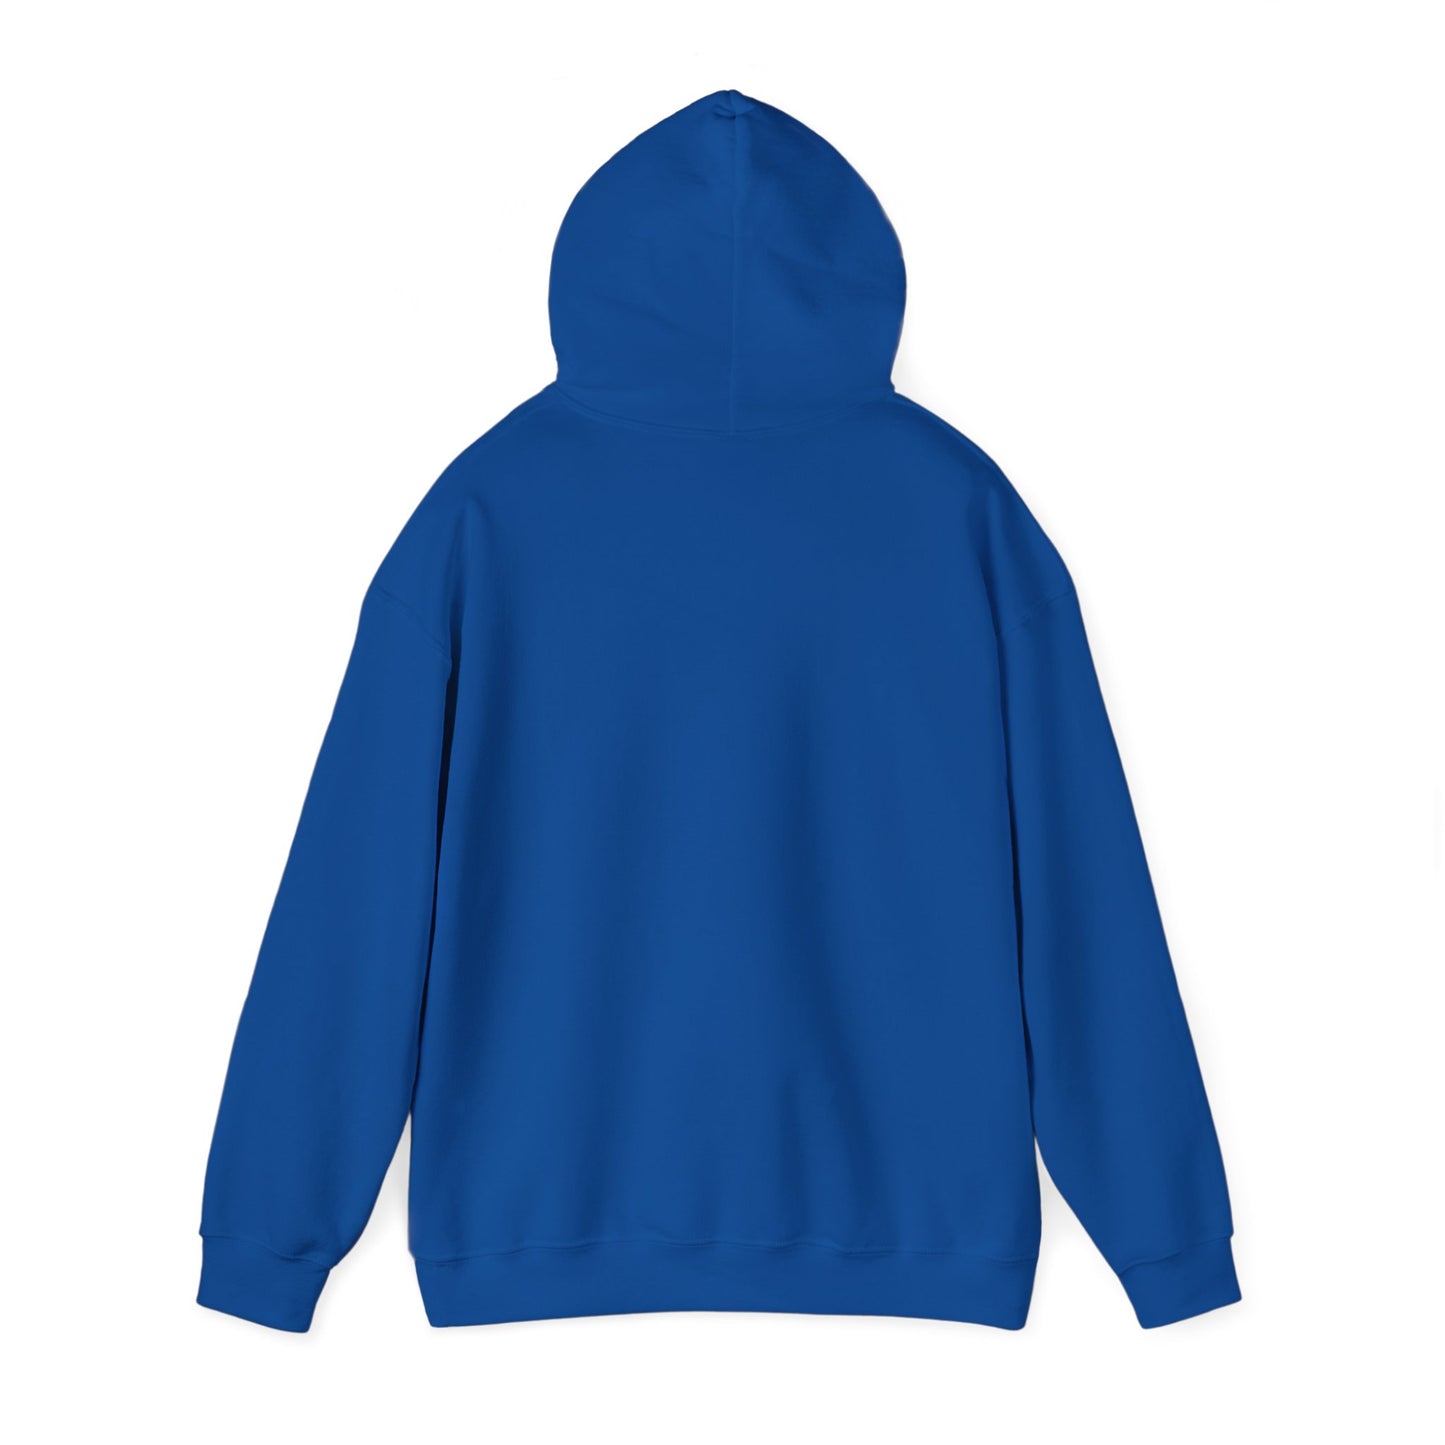 #no diddy p diddy Unisex Heavy Blend™ Hooded Sweatshirt